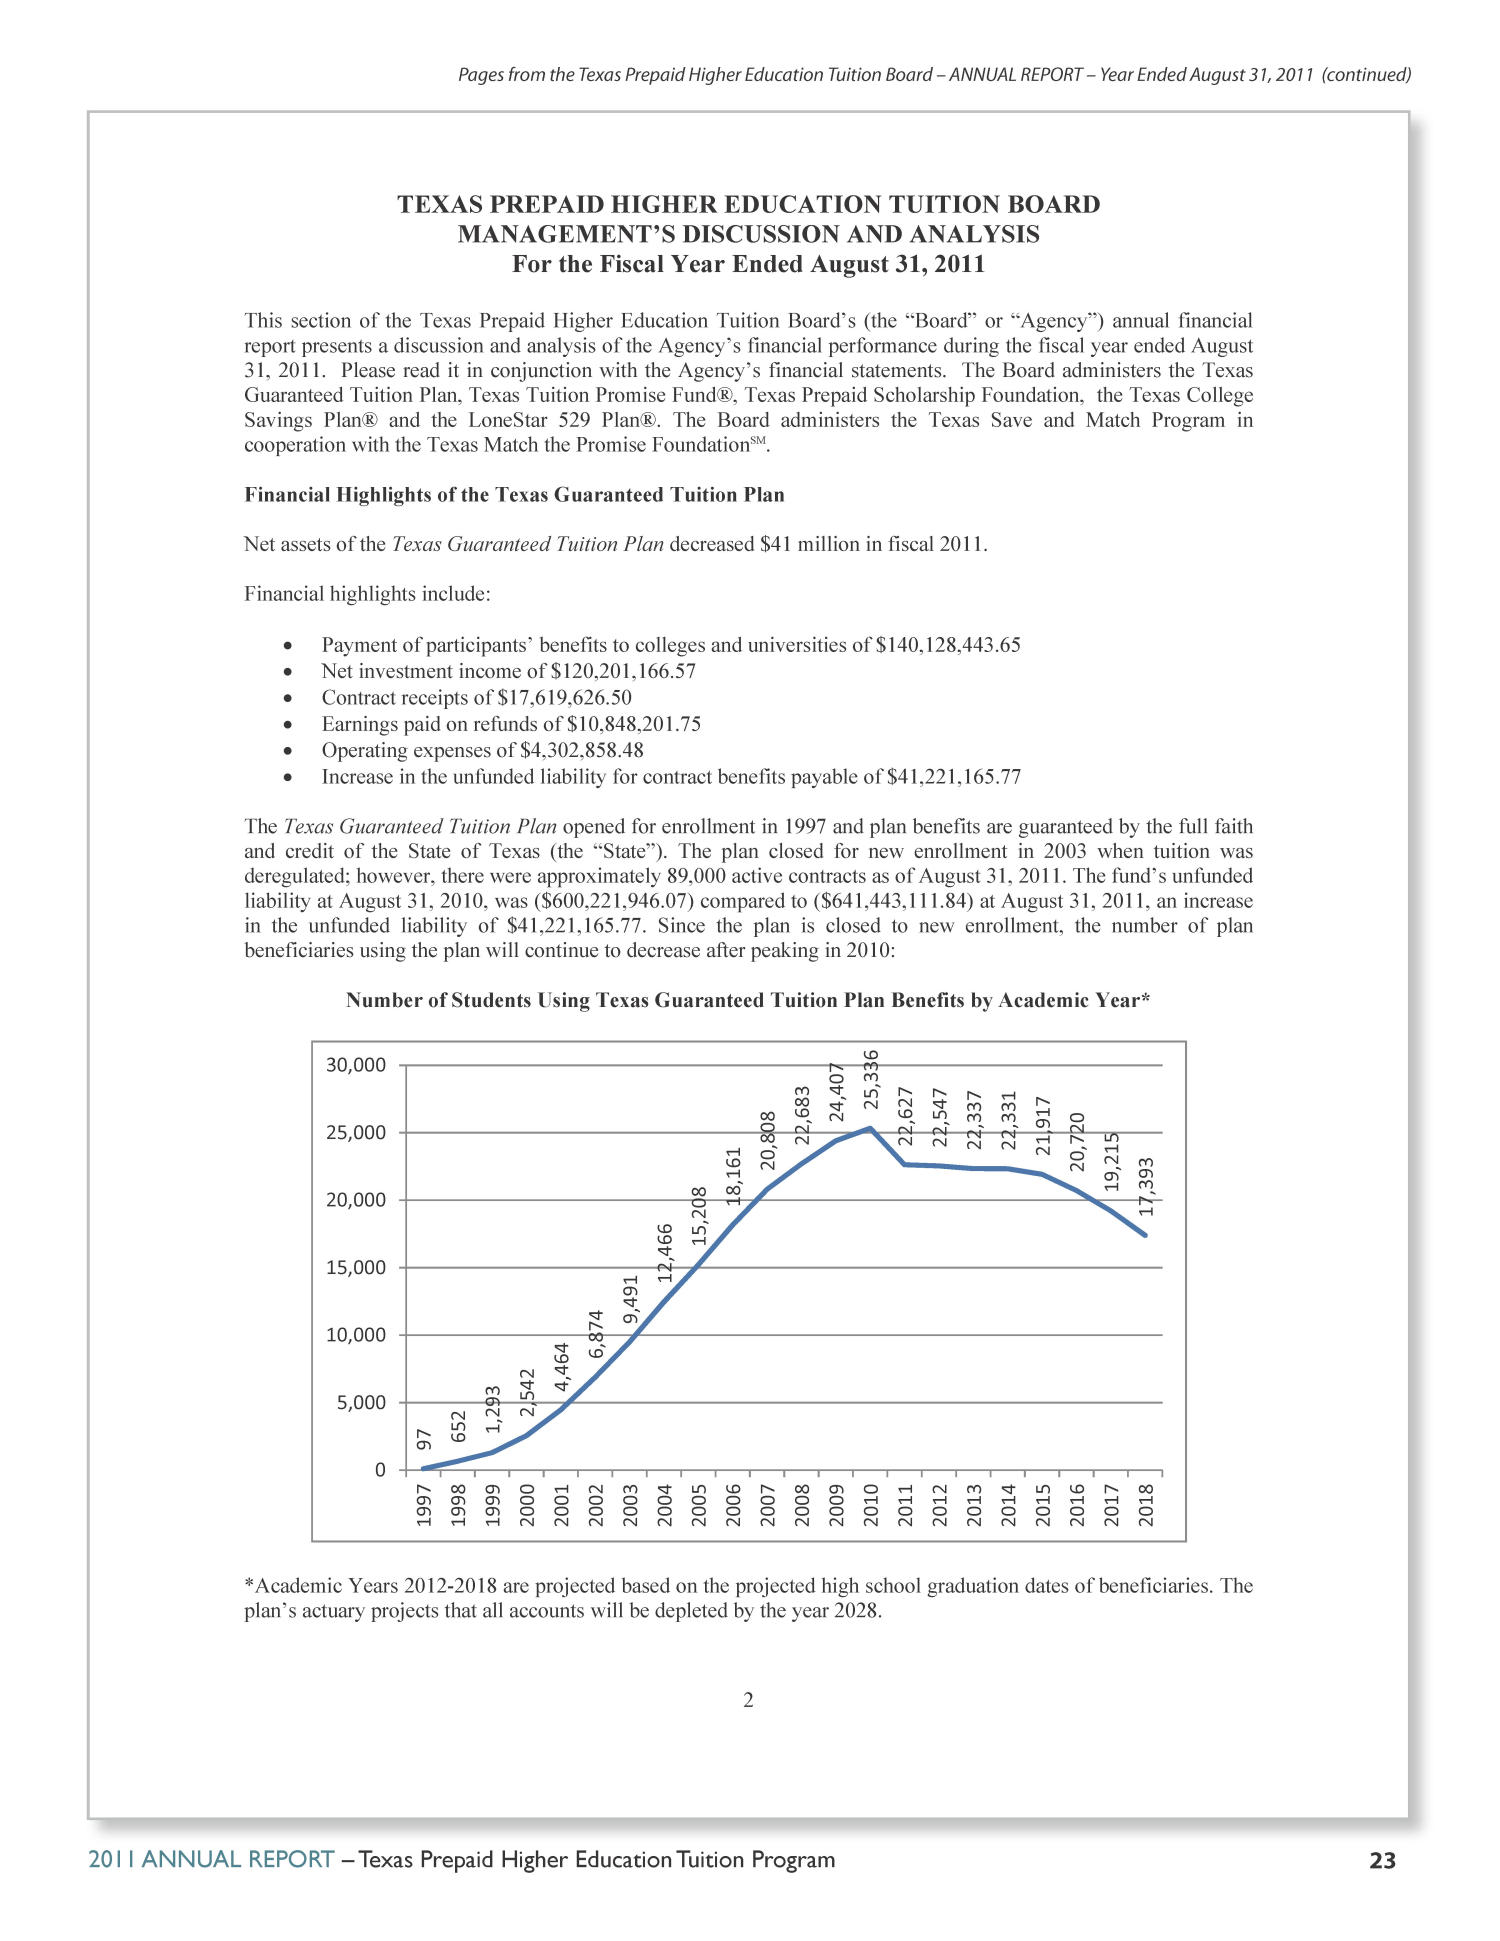 Texas Prepaid Higher Education Tuition Program Annual Report, 2011
                                                
                                                    23
                                                